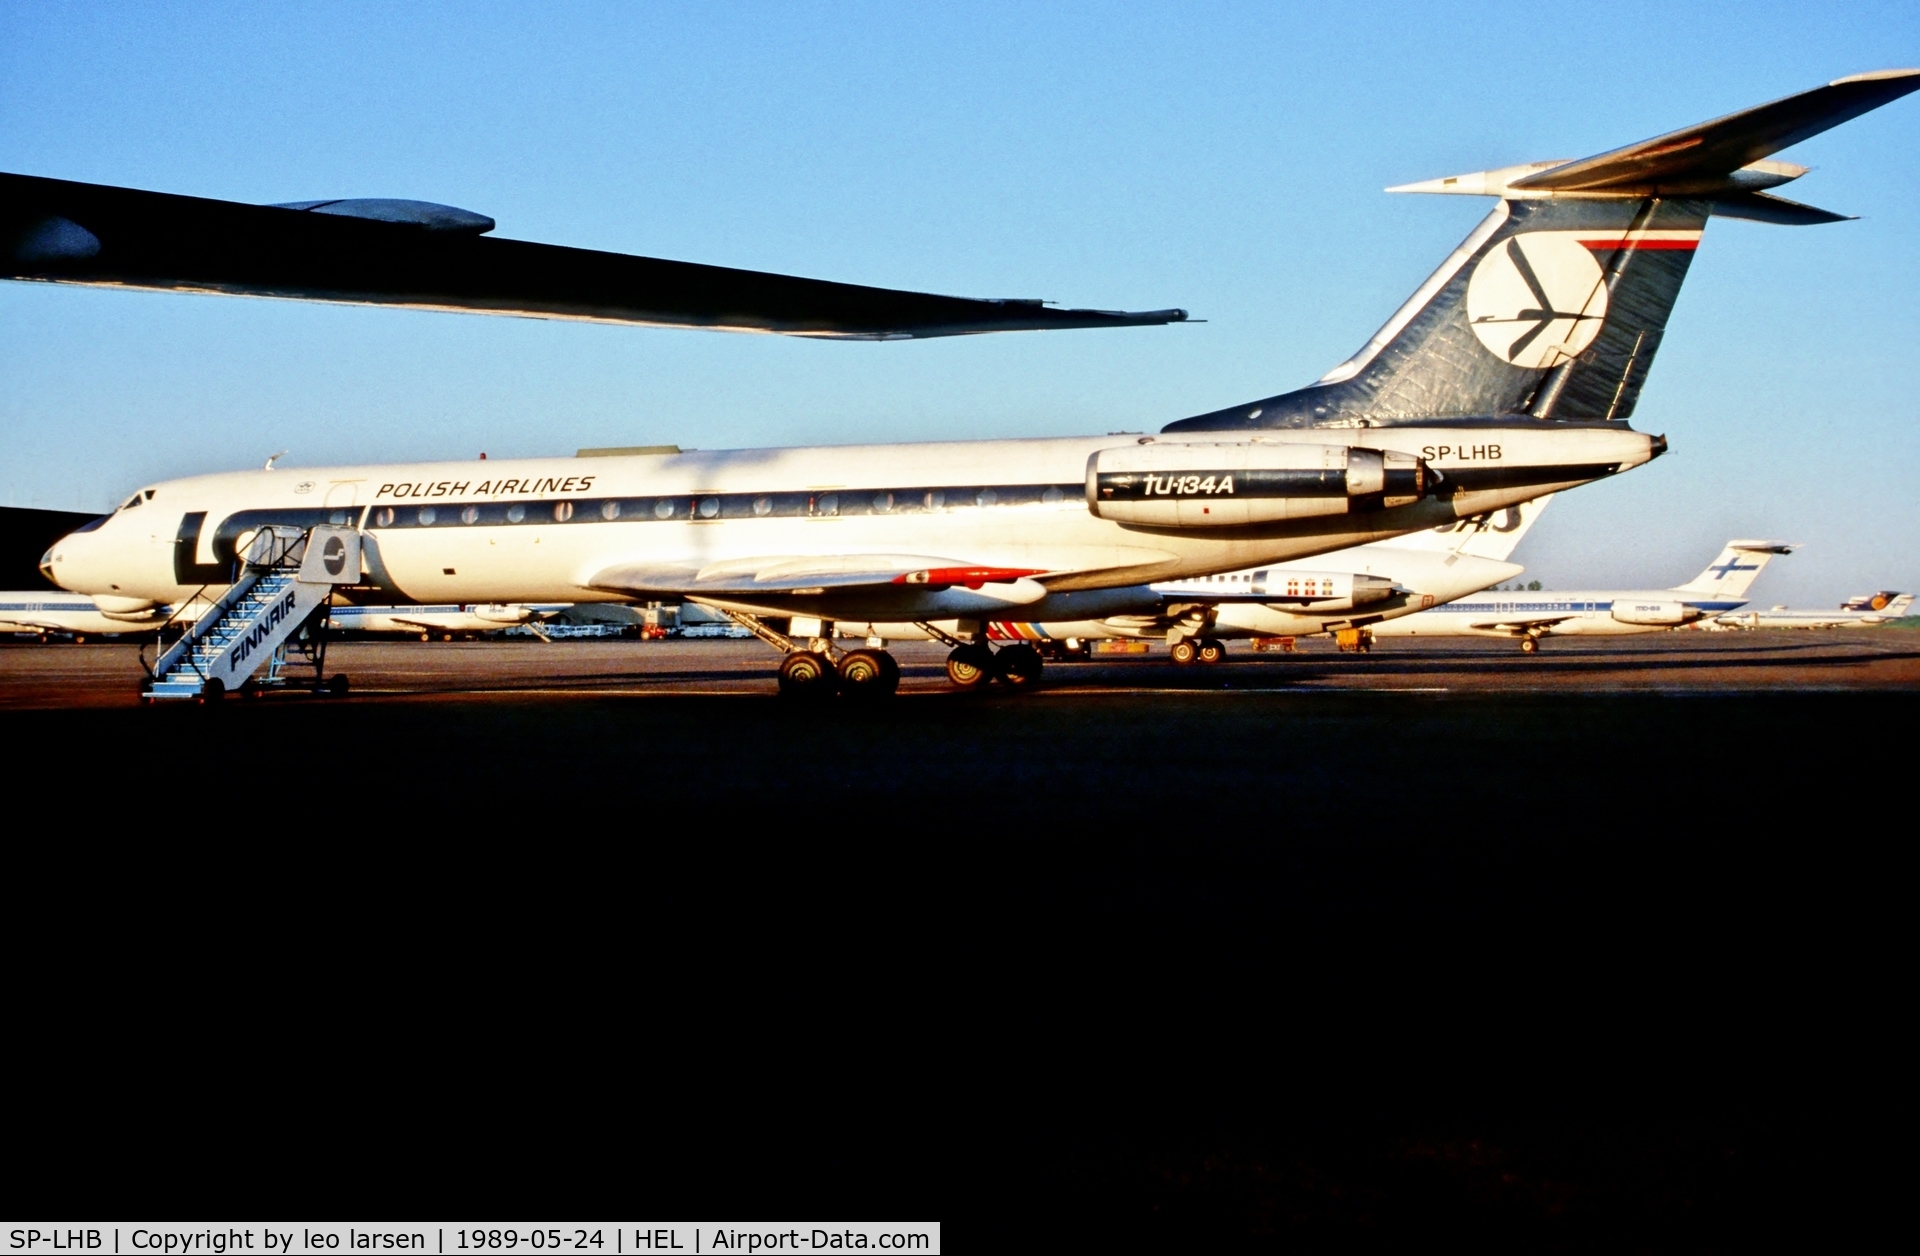 SP-LHB, 1973 Tupolev Tu-134A C/N 3351809, Helsinki 24.5.1989